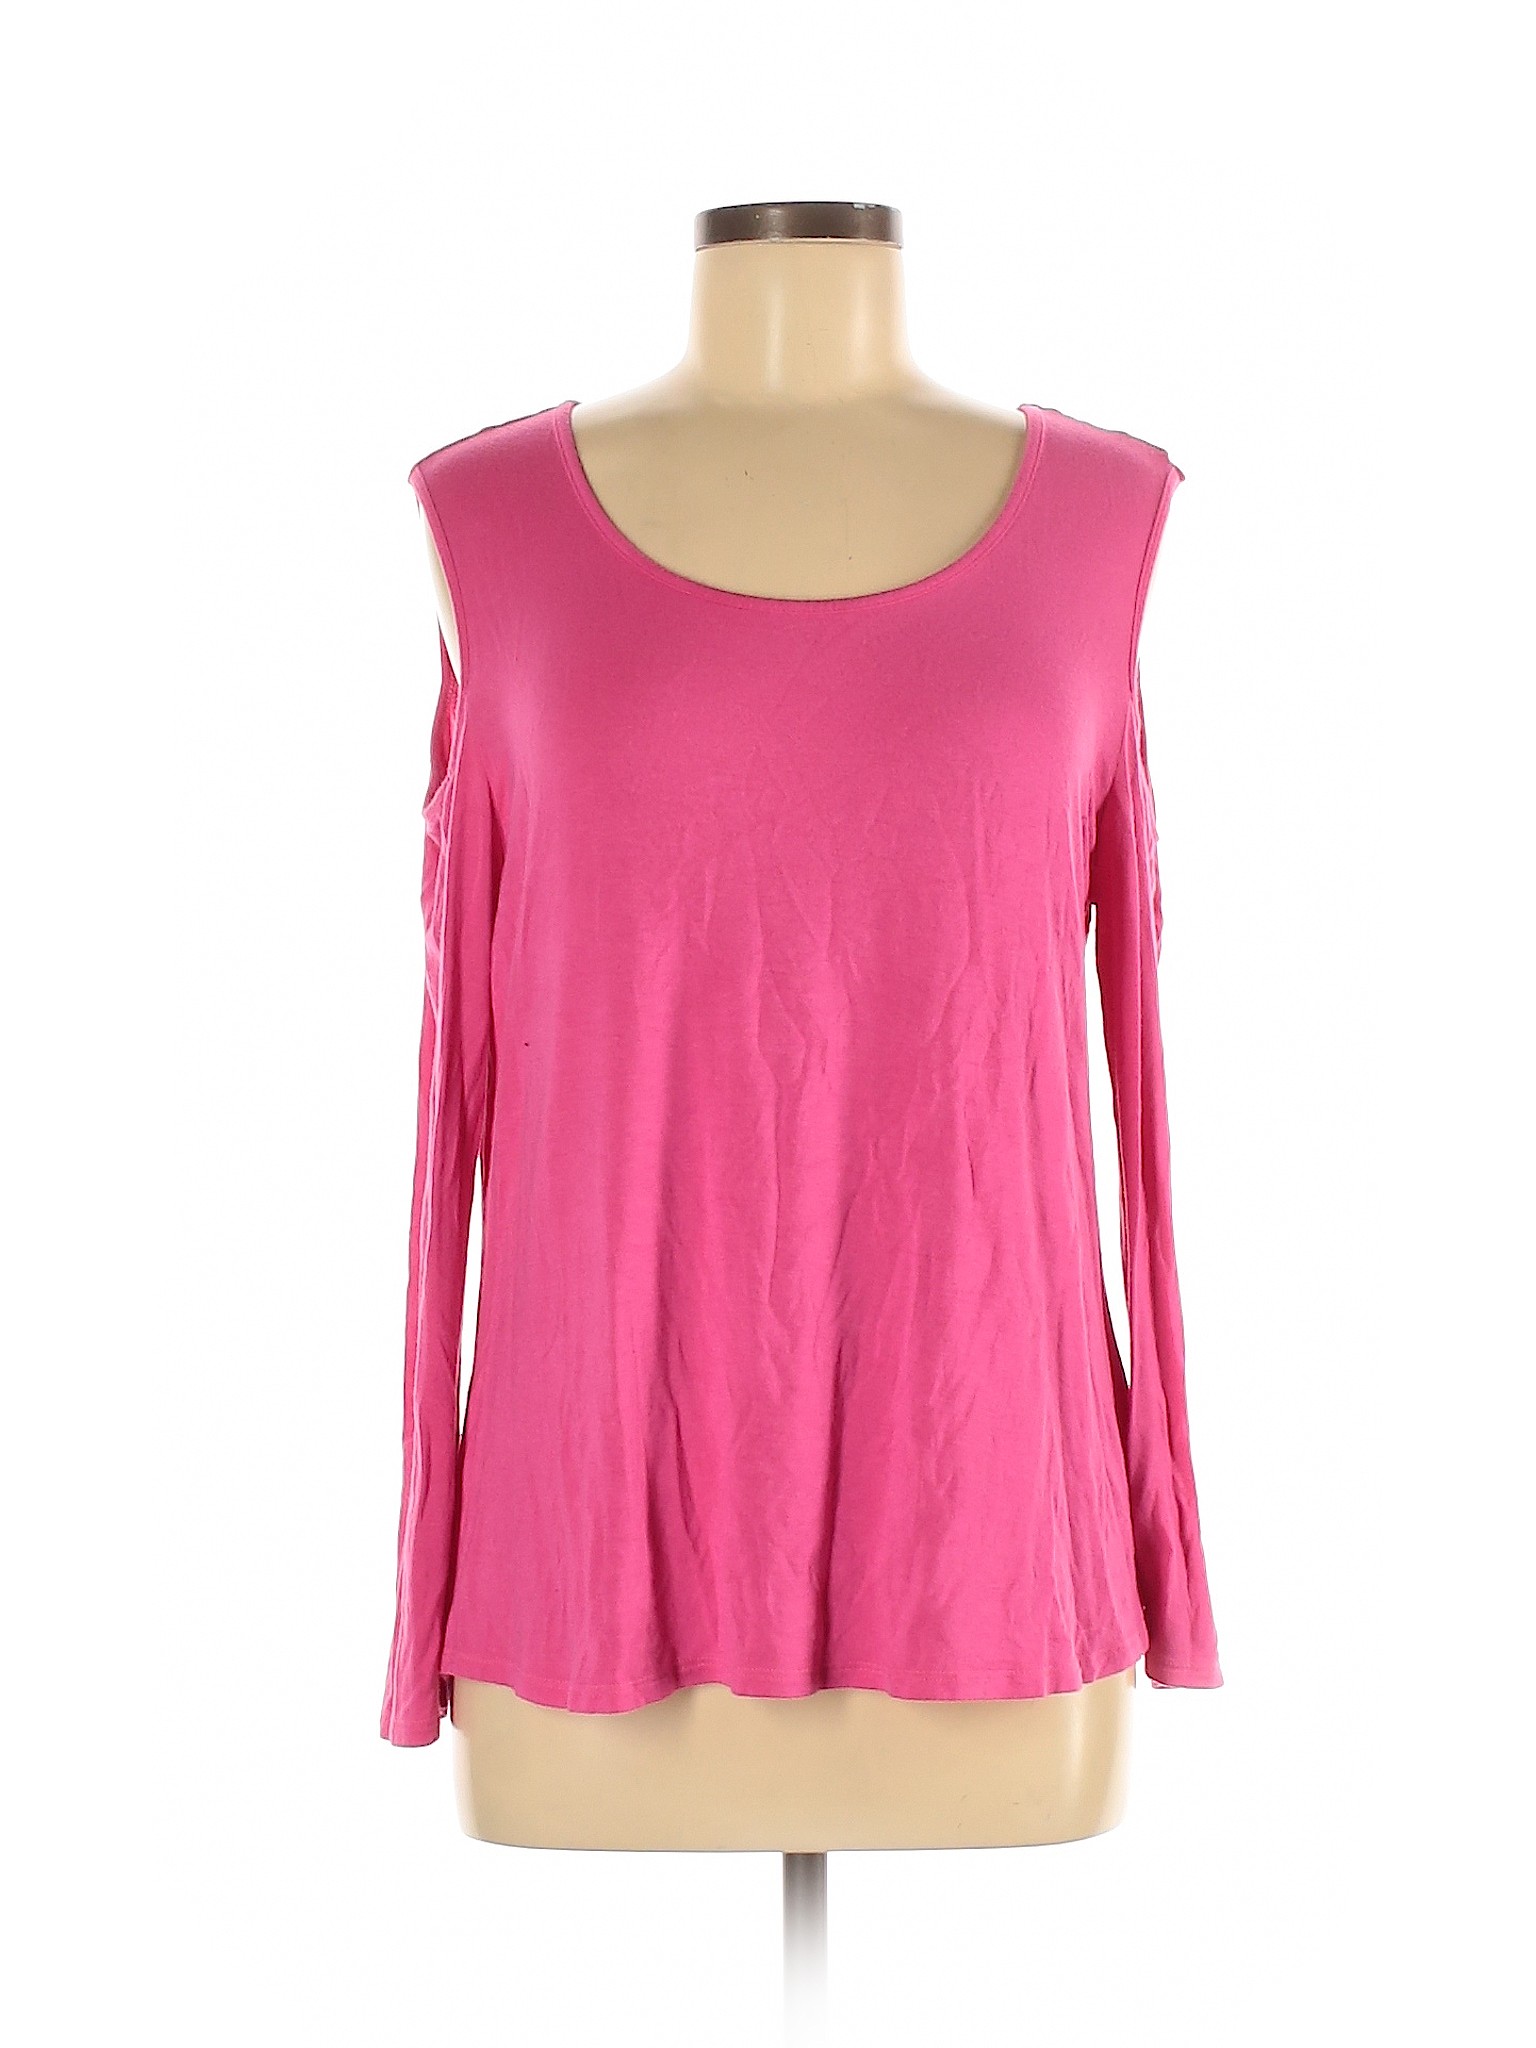 Como Vintage Women Pink Long Sleeve Top L | eBay